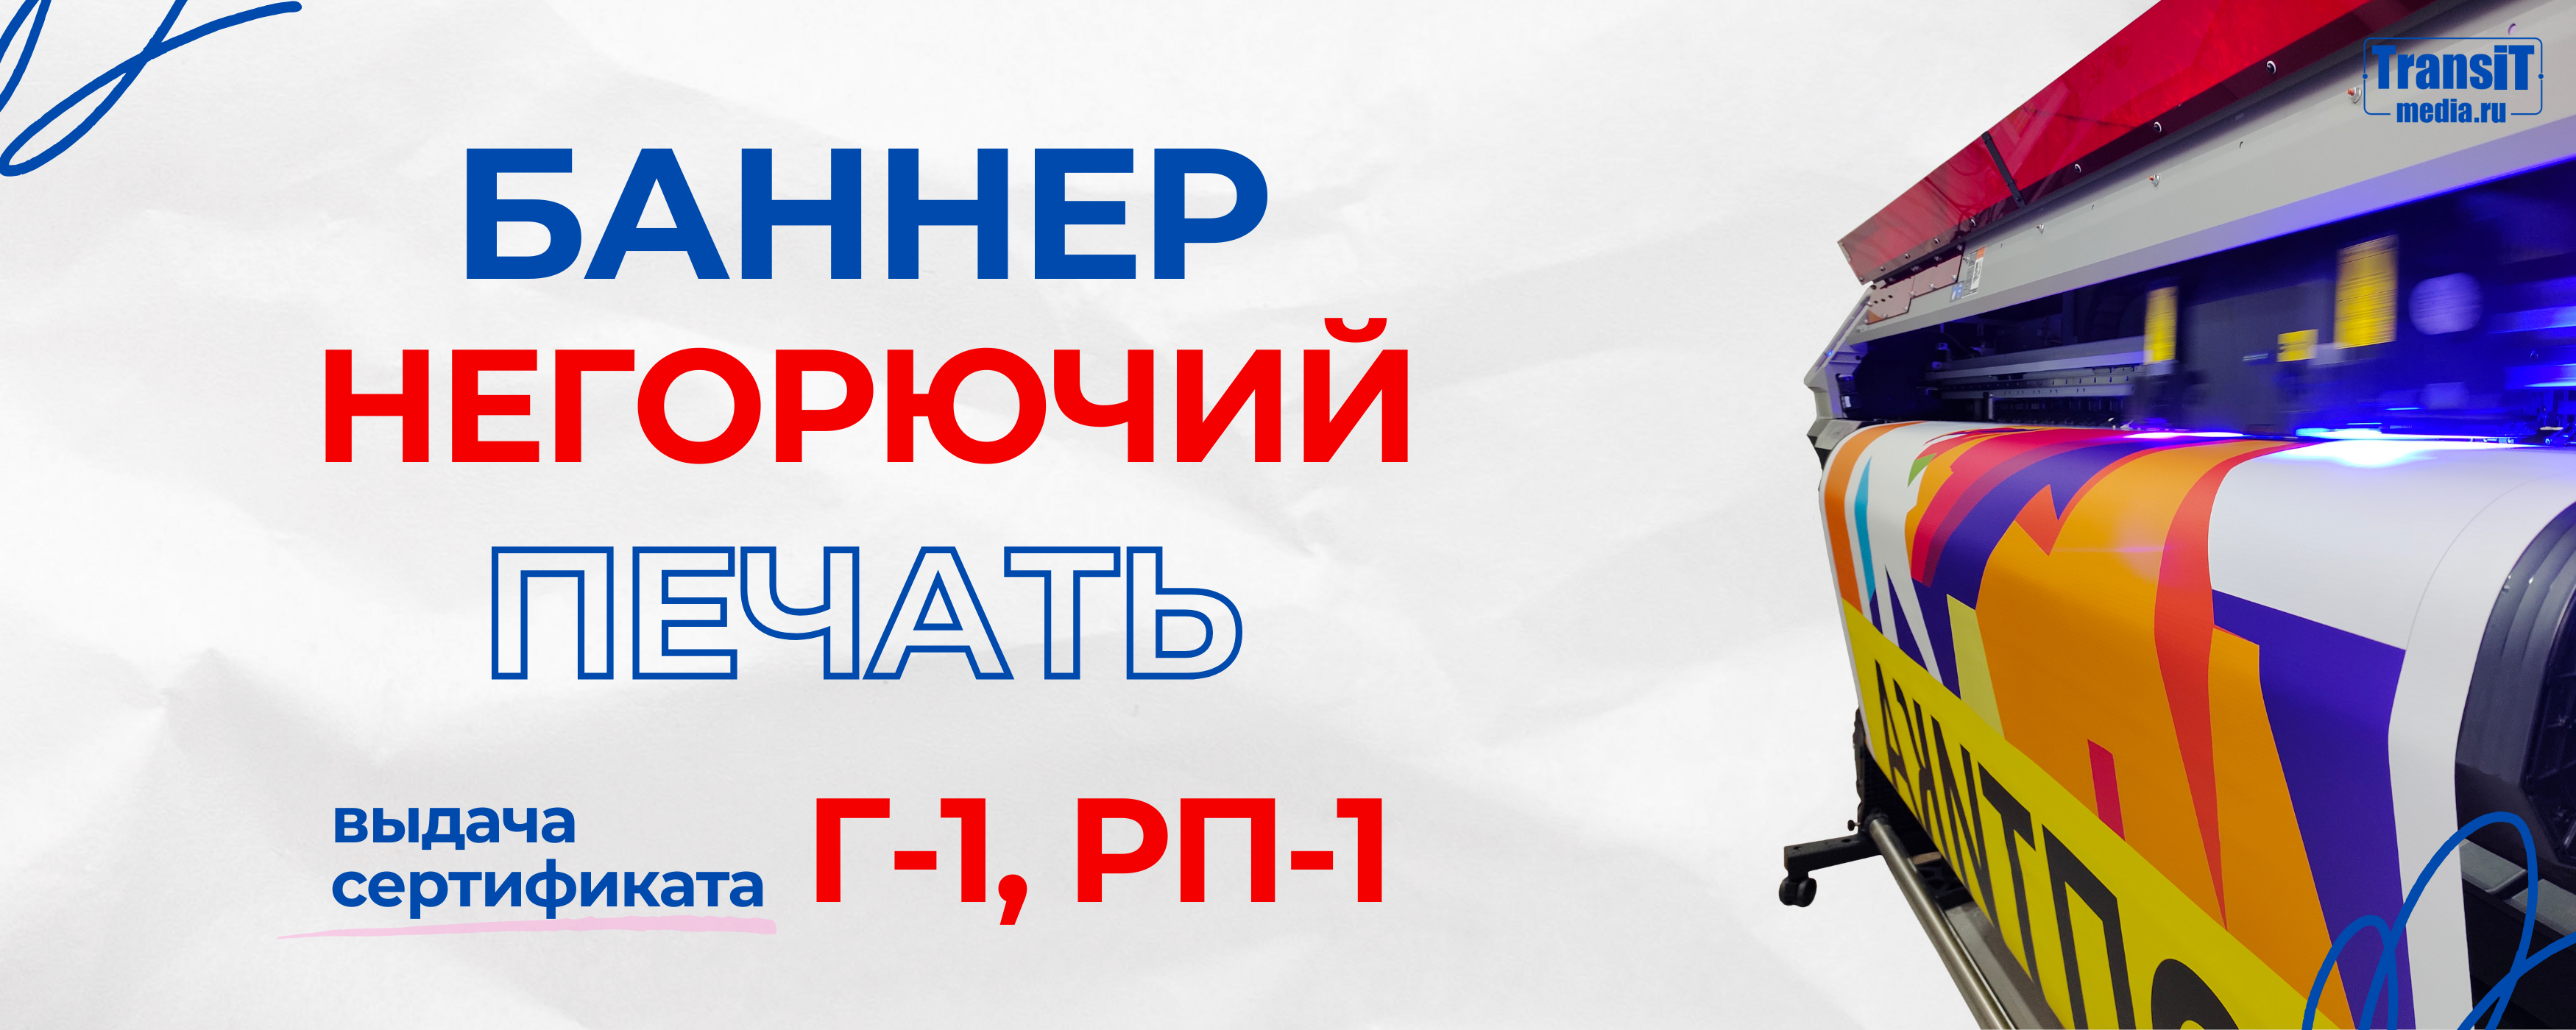 negoruchiy banner pechat simferopol